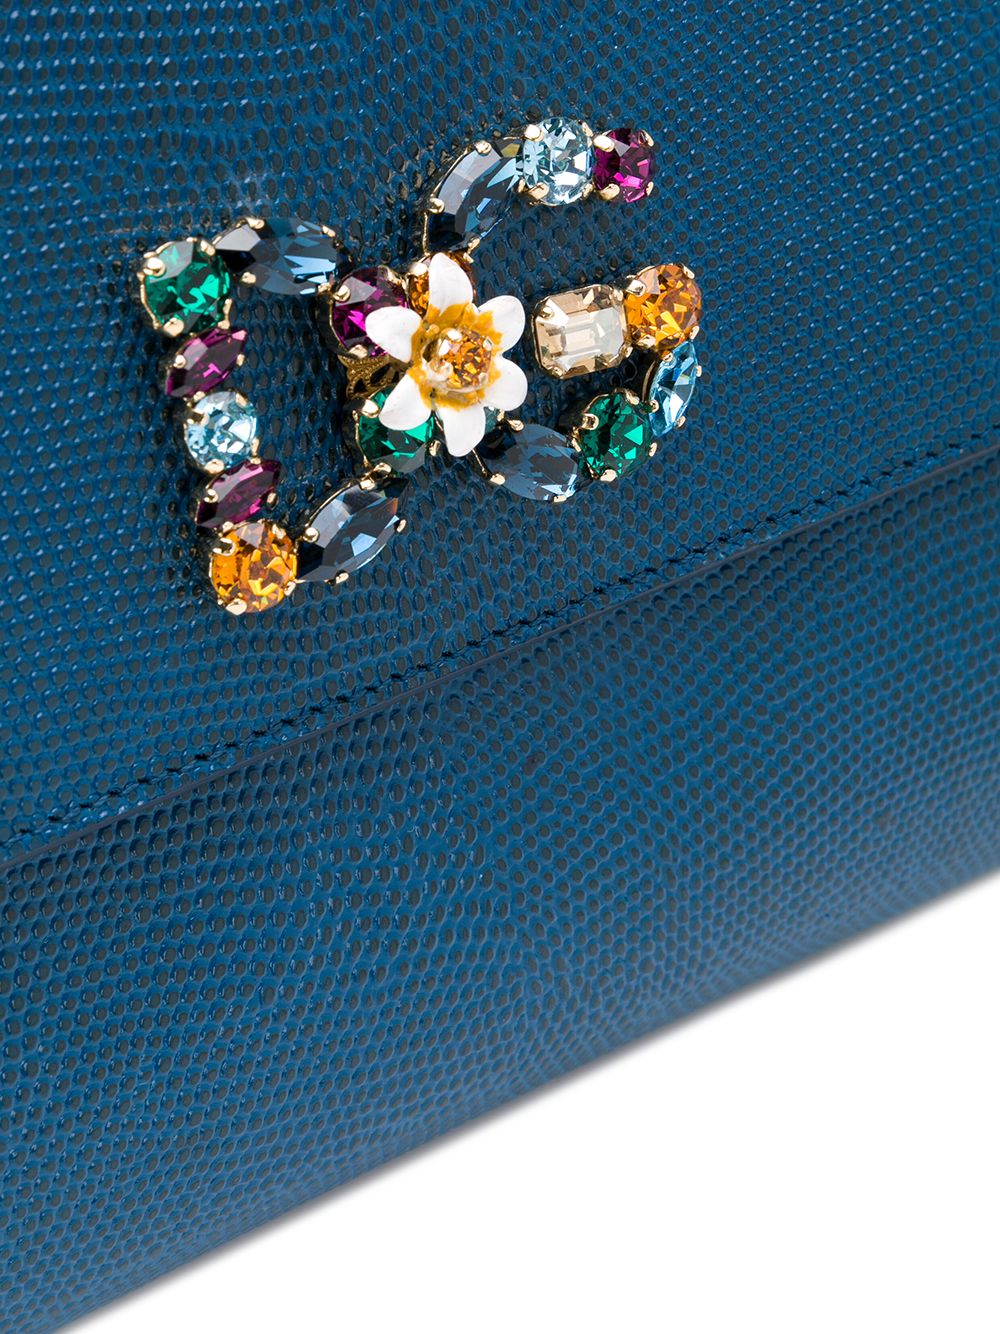 сумка 'Jewelled Sicily' Dolce&Gabbana 12540076636363633263